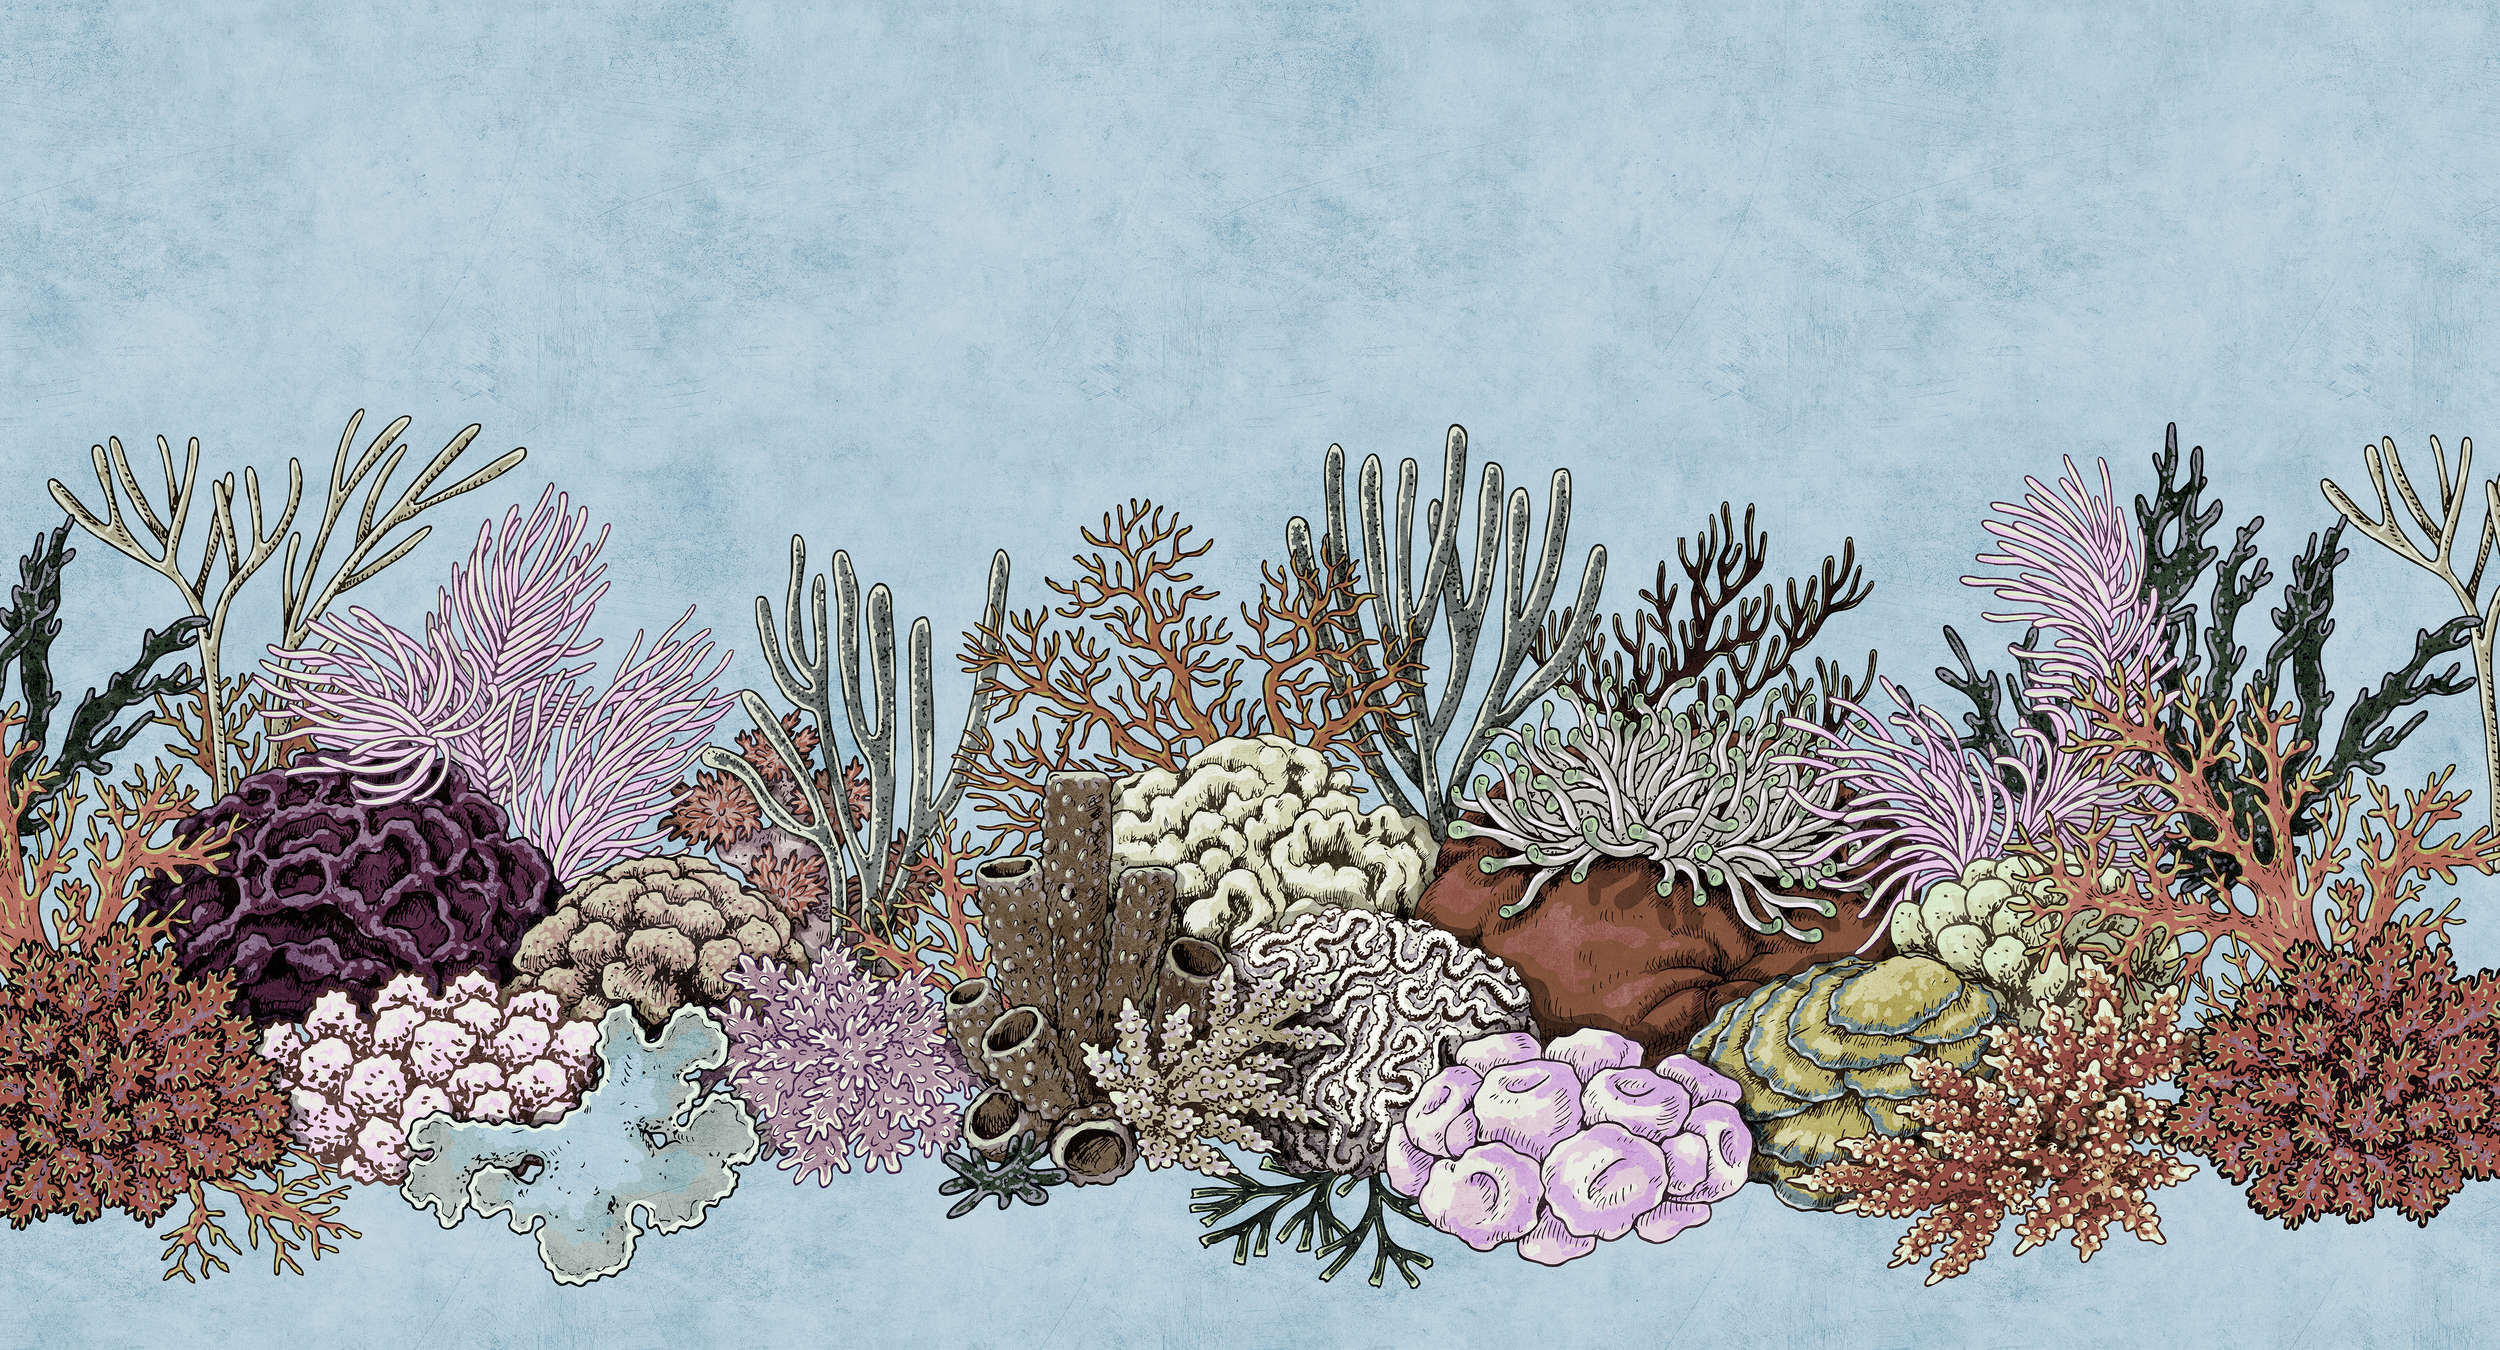             Octopus's Garden 1 - Carta da parati subacquea con coralli in struttura di carta assorbente - Blu, Rosa | Vello liscio opaco
        